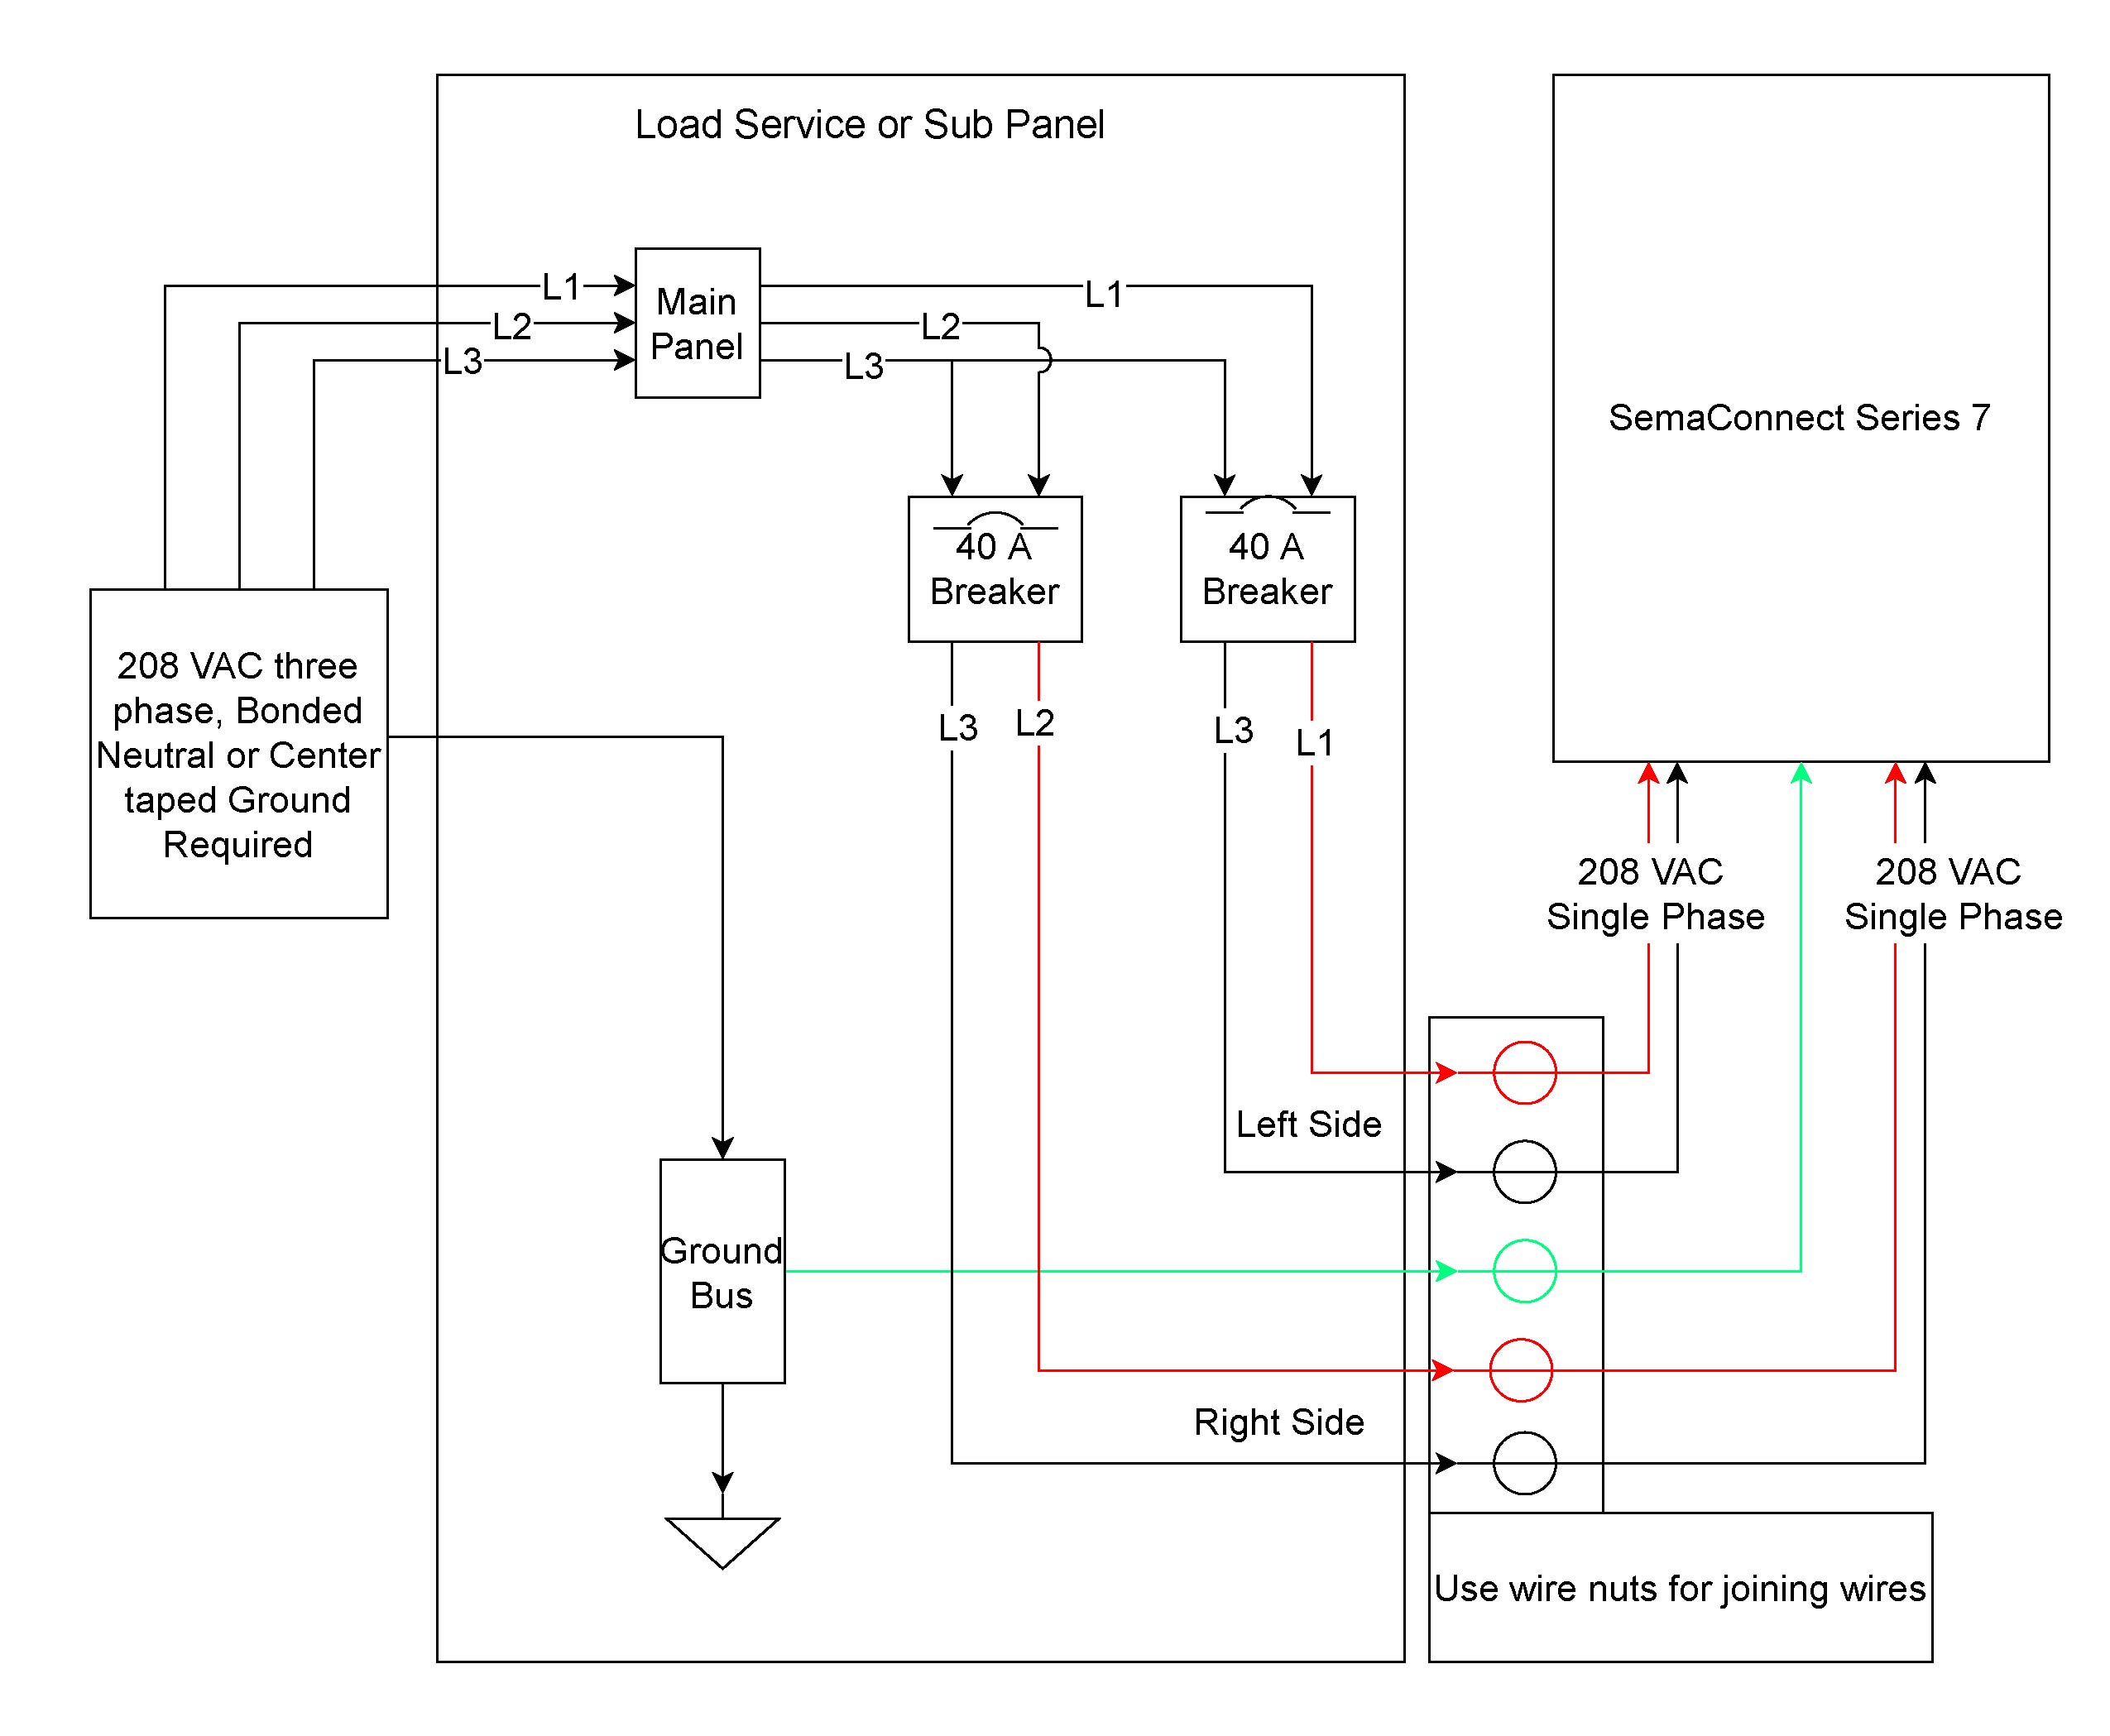 8141-00 defrost timer wiring diagram